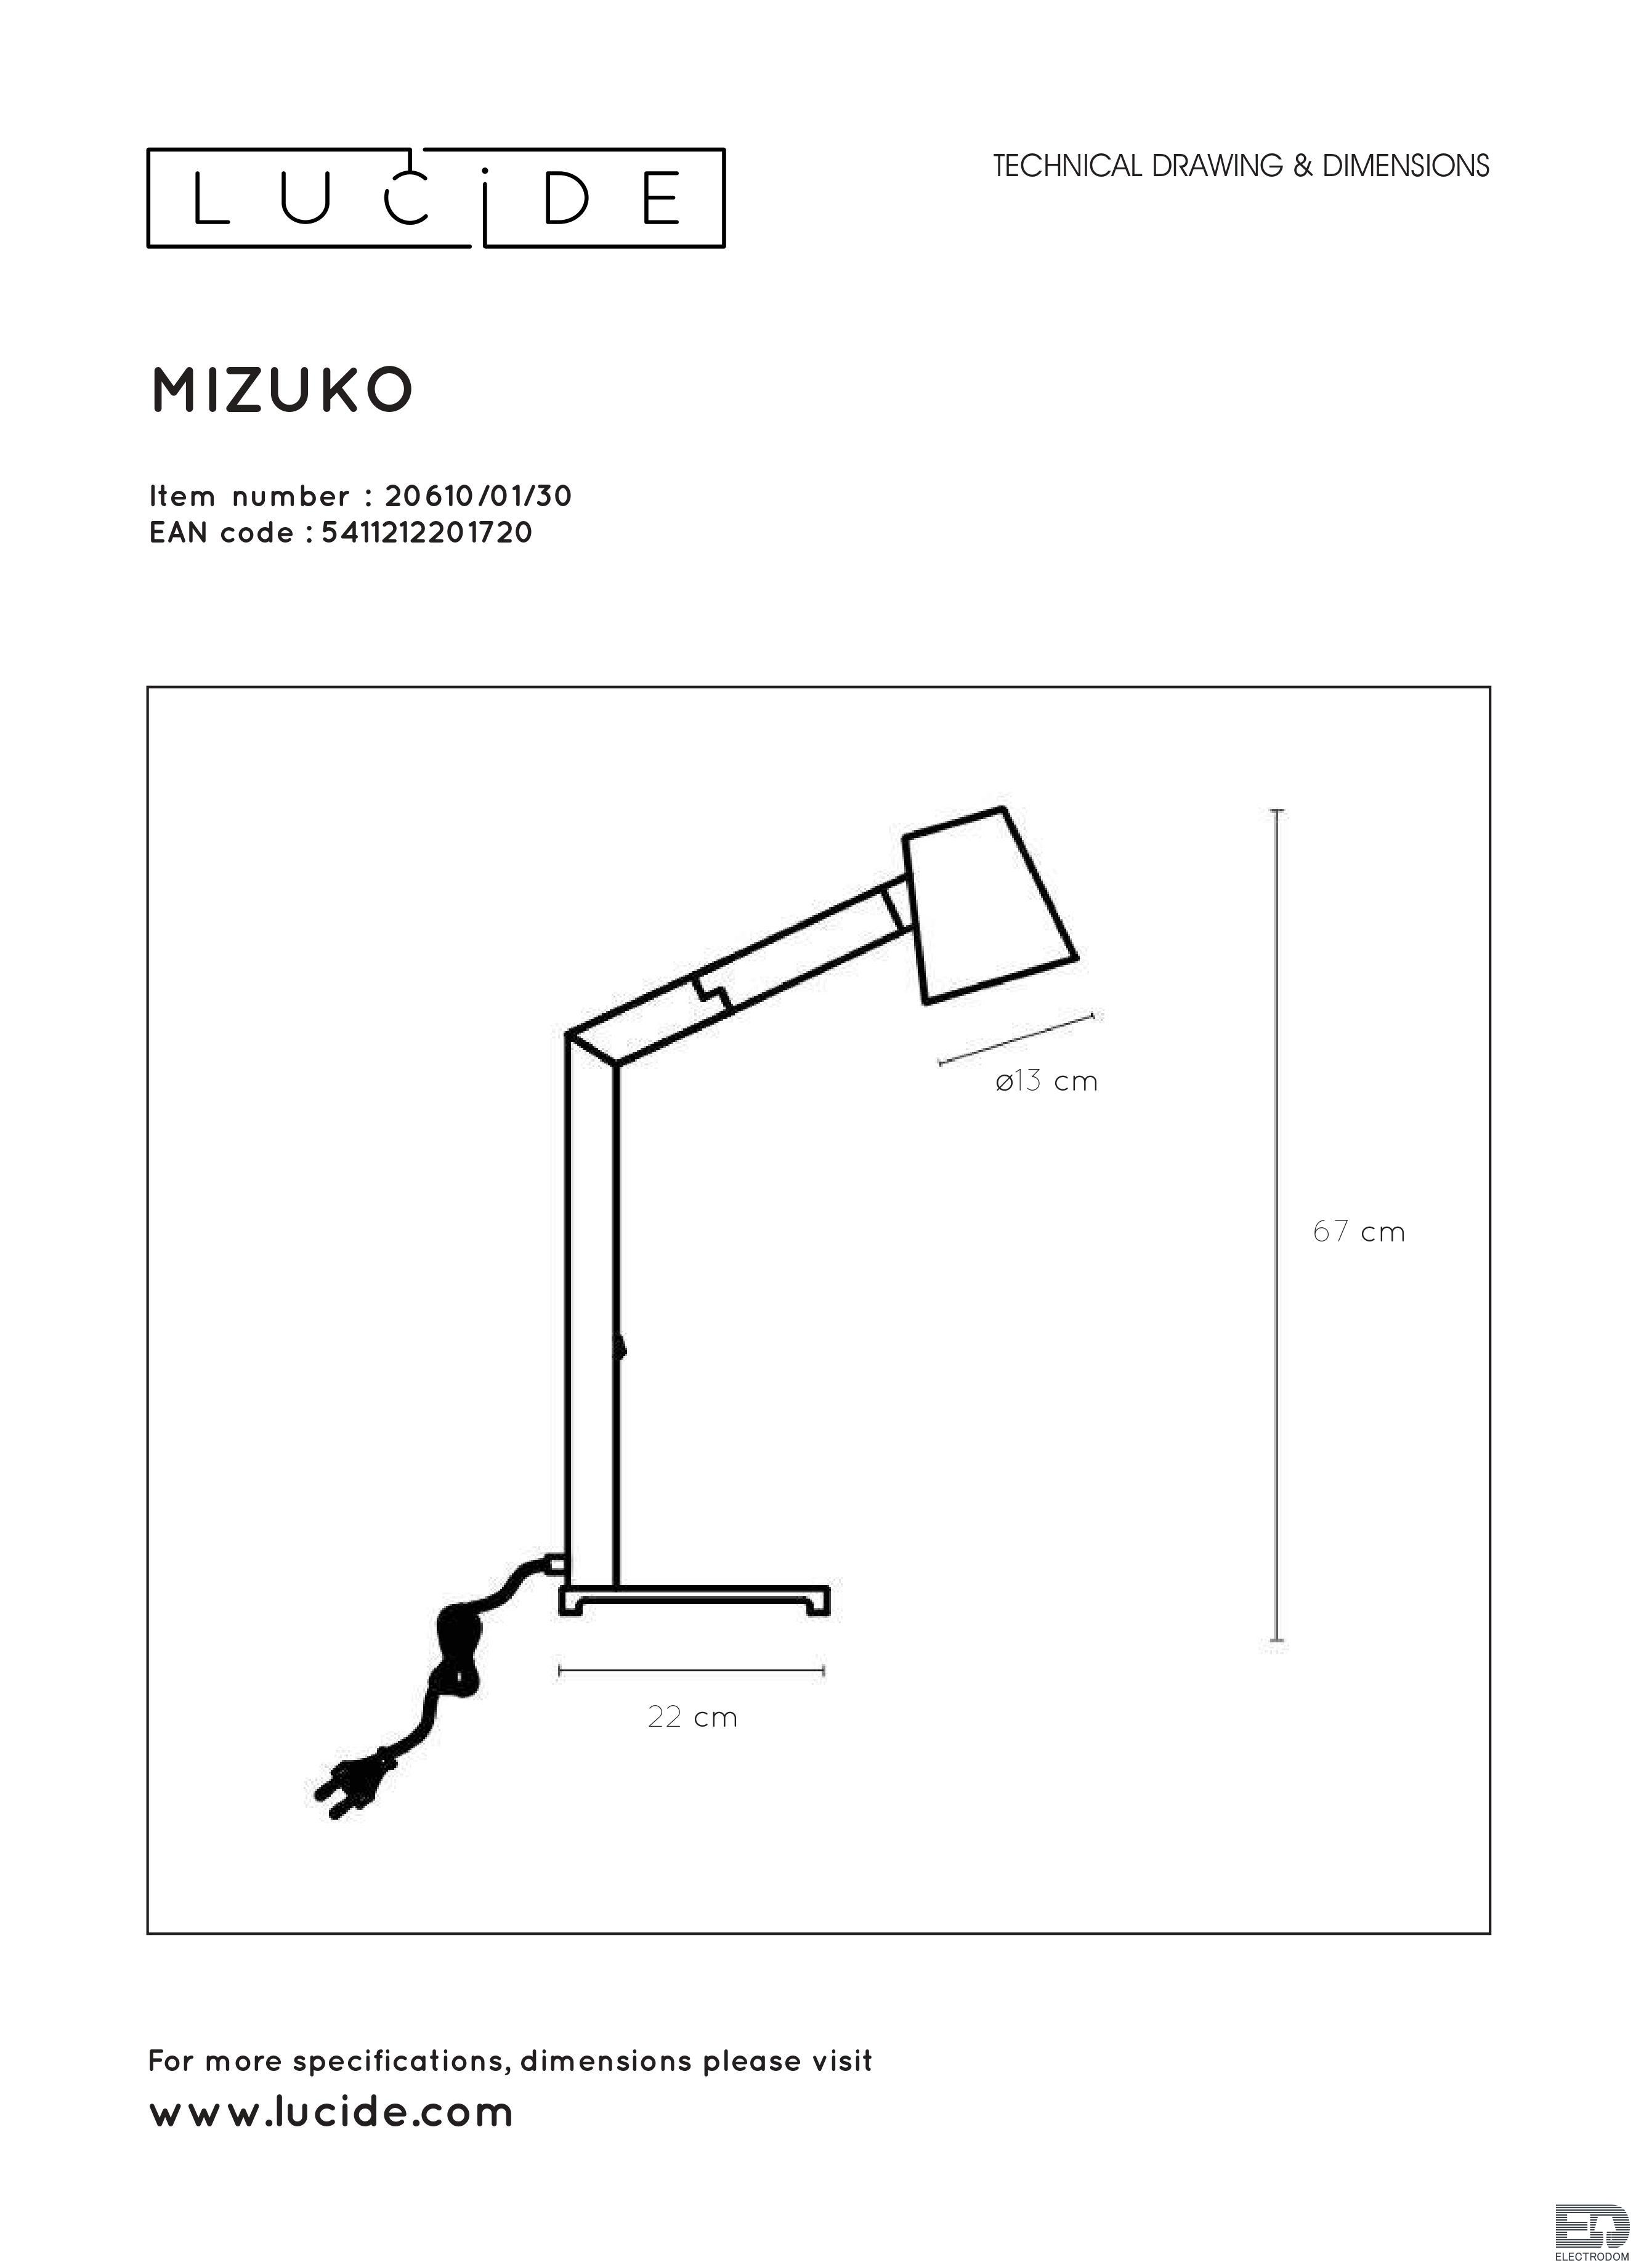 Настольная лампа Lucide Mizuko 20610/01/30 - цена и фото 11